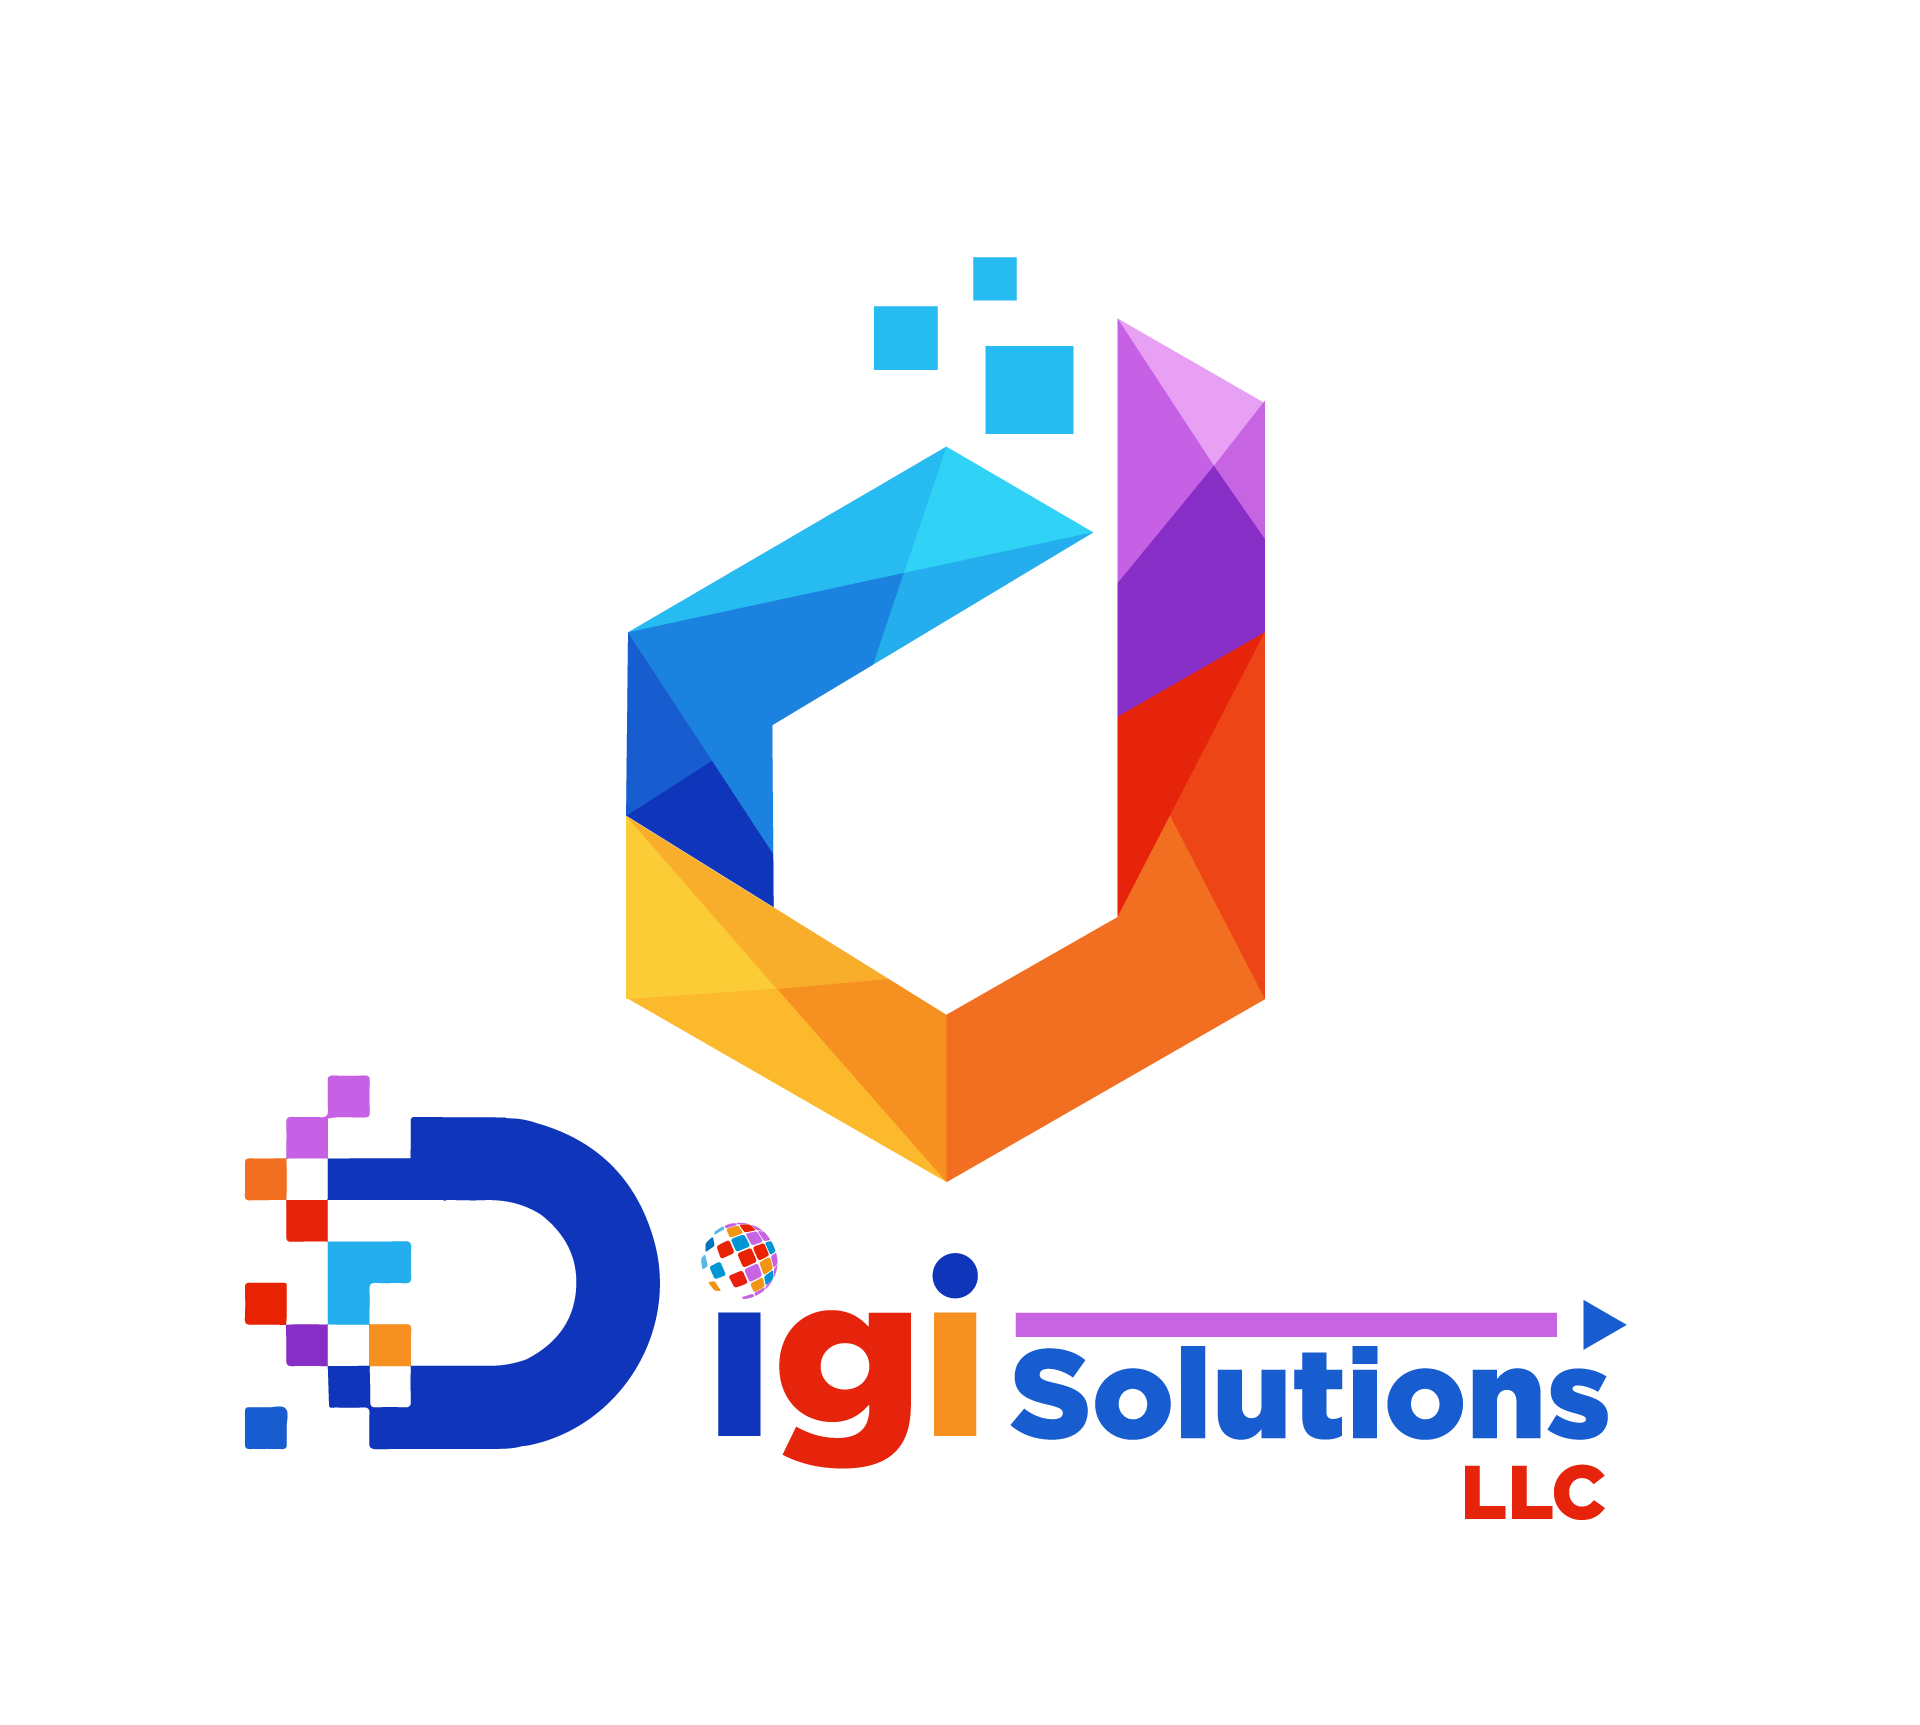 DigiSolutions LLC